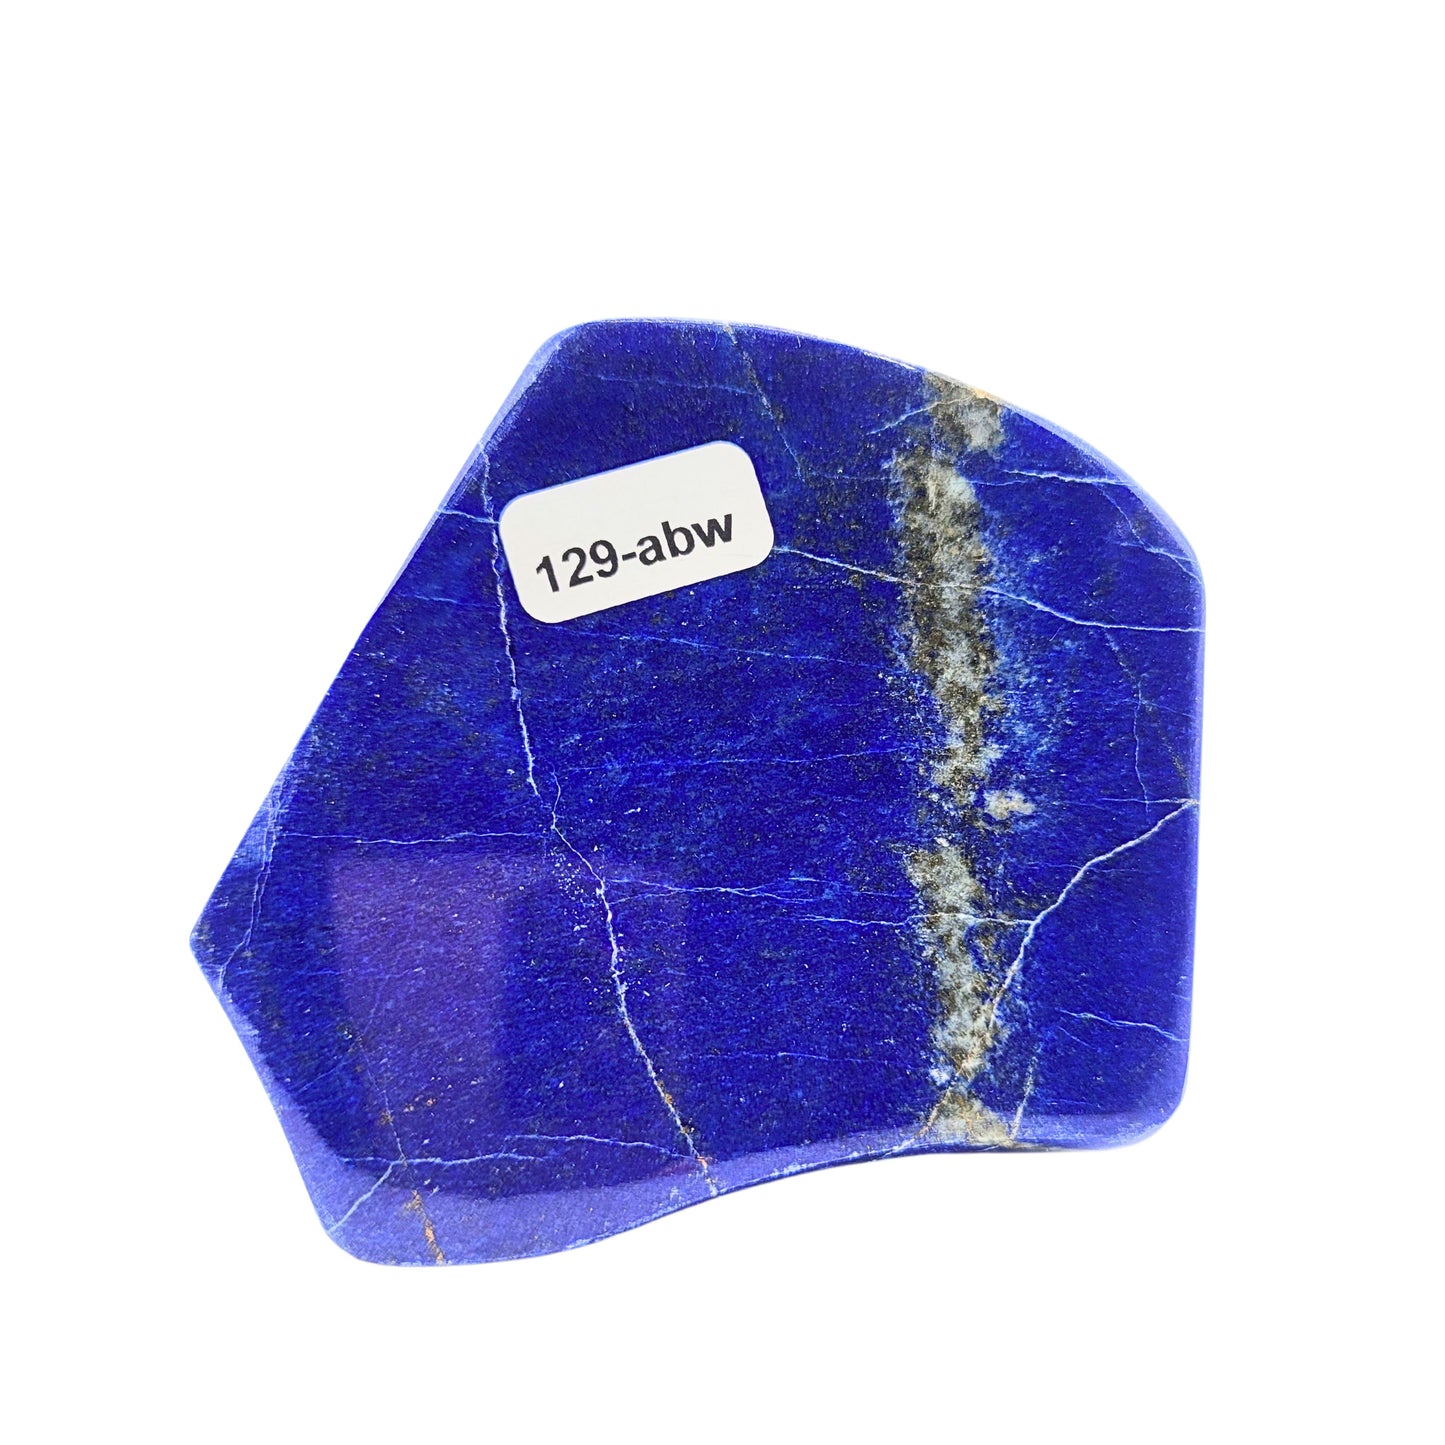 Lapis Lazuli 129-abw